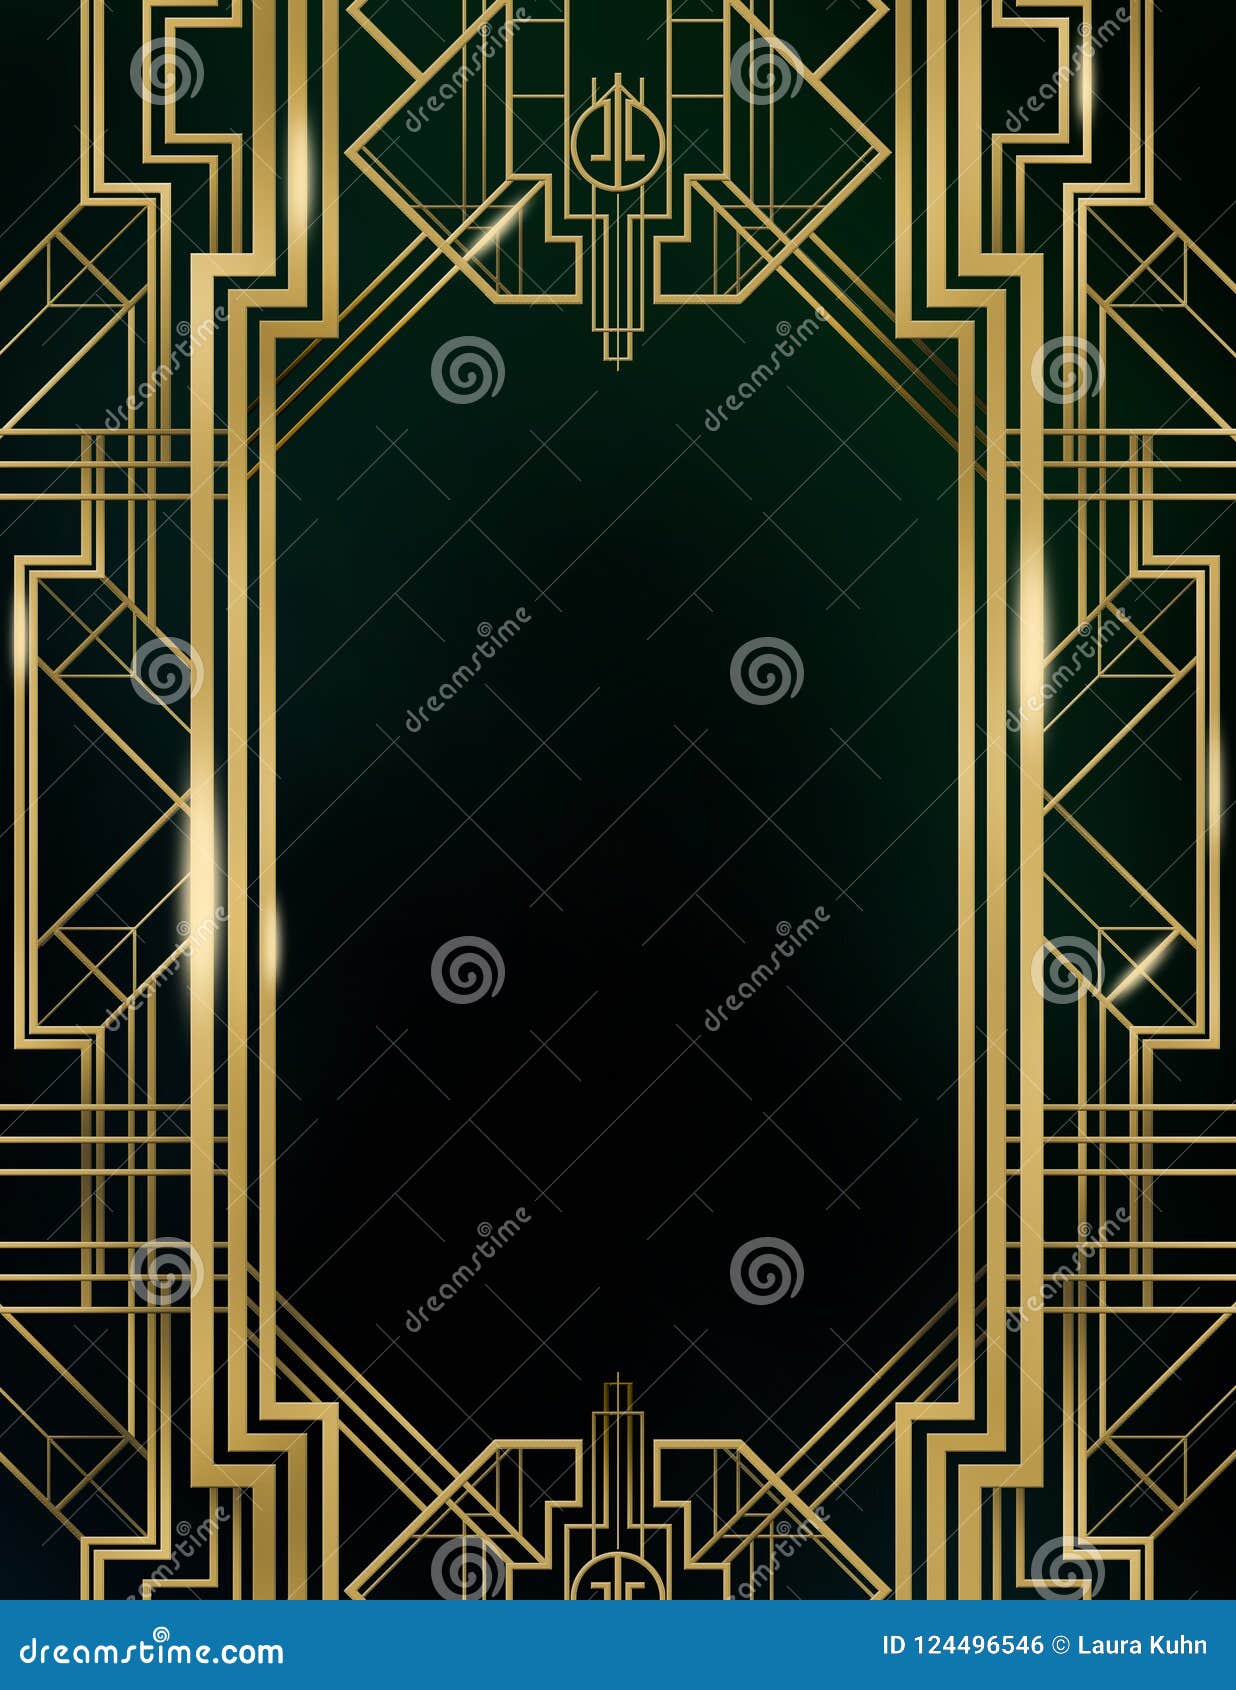 Great Gatsby Movie Inspiration Film Backdrop Background Poster Stock  Illustration - Illustration of angeles, artwork: 124496546